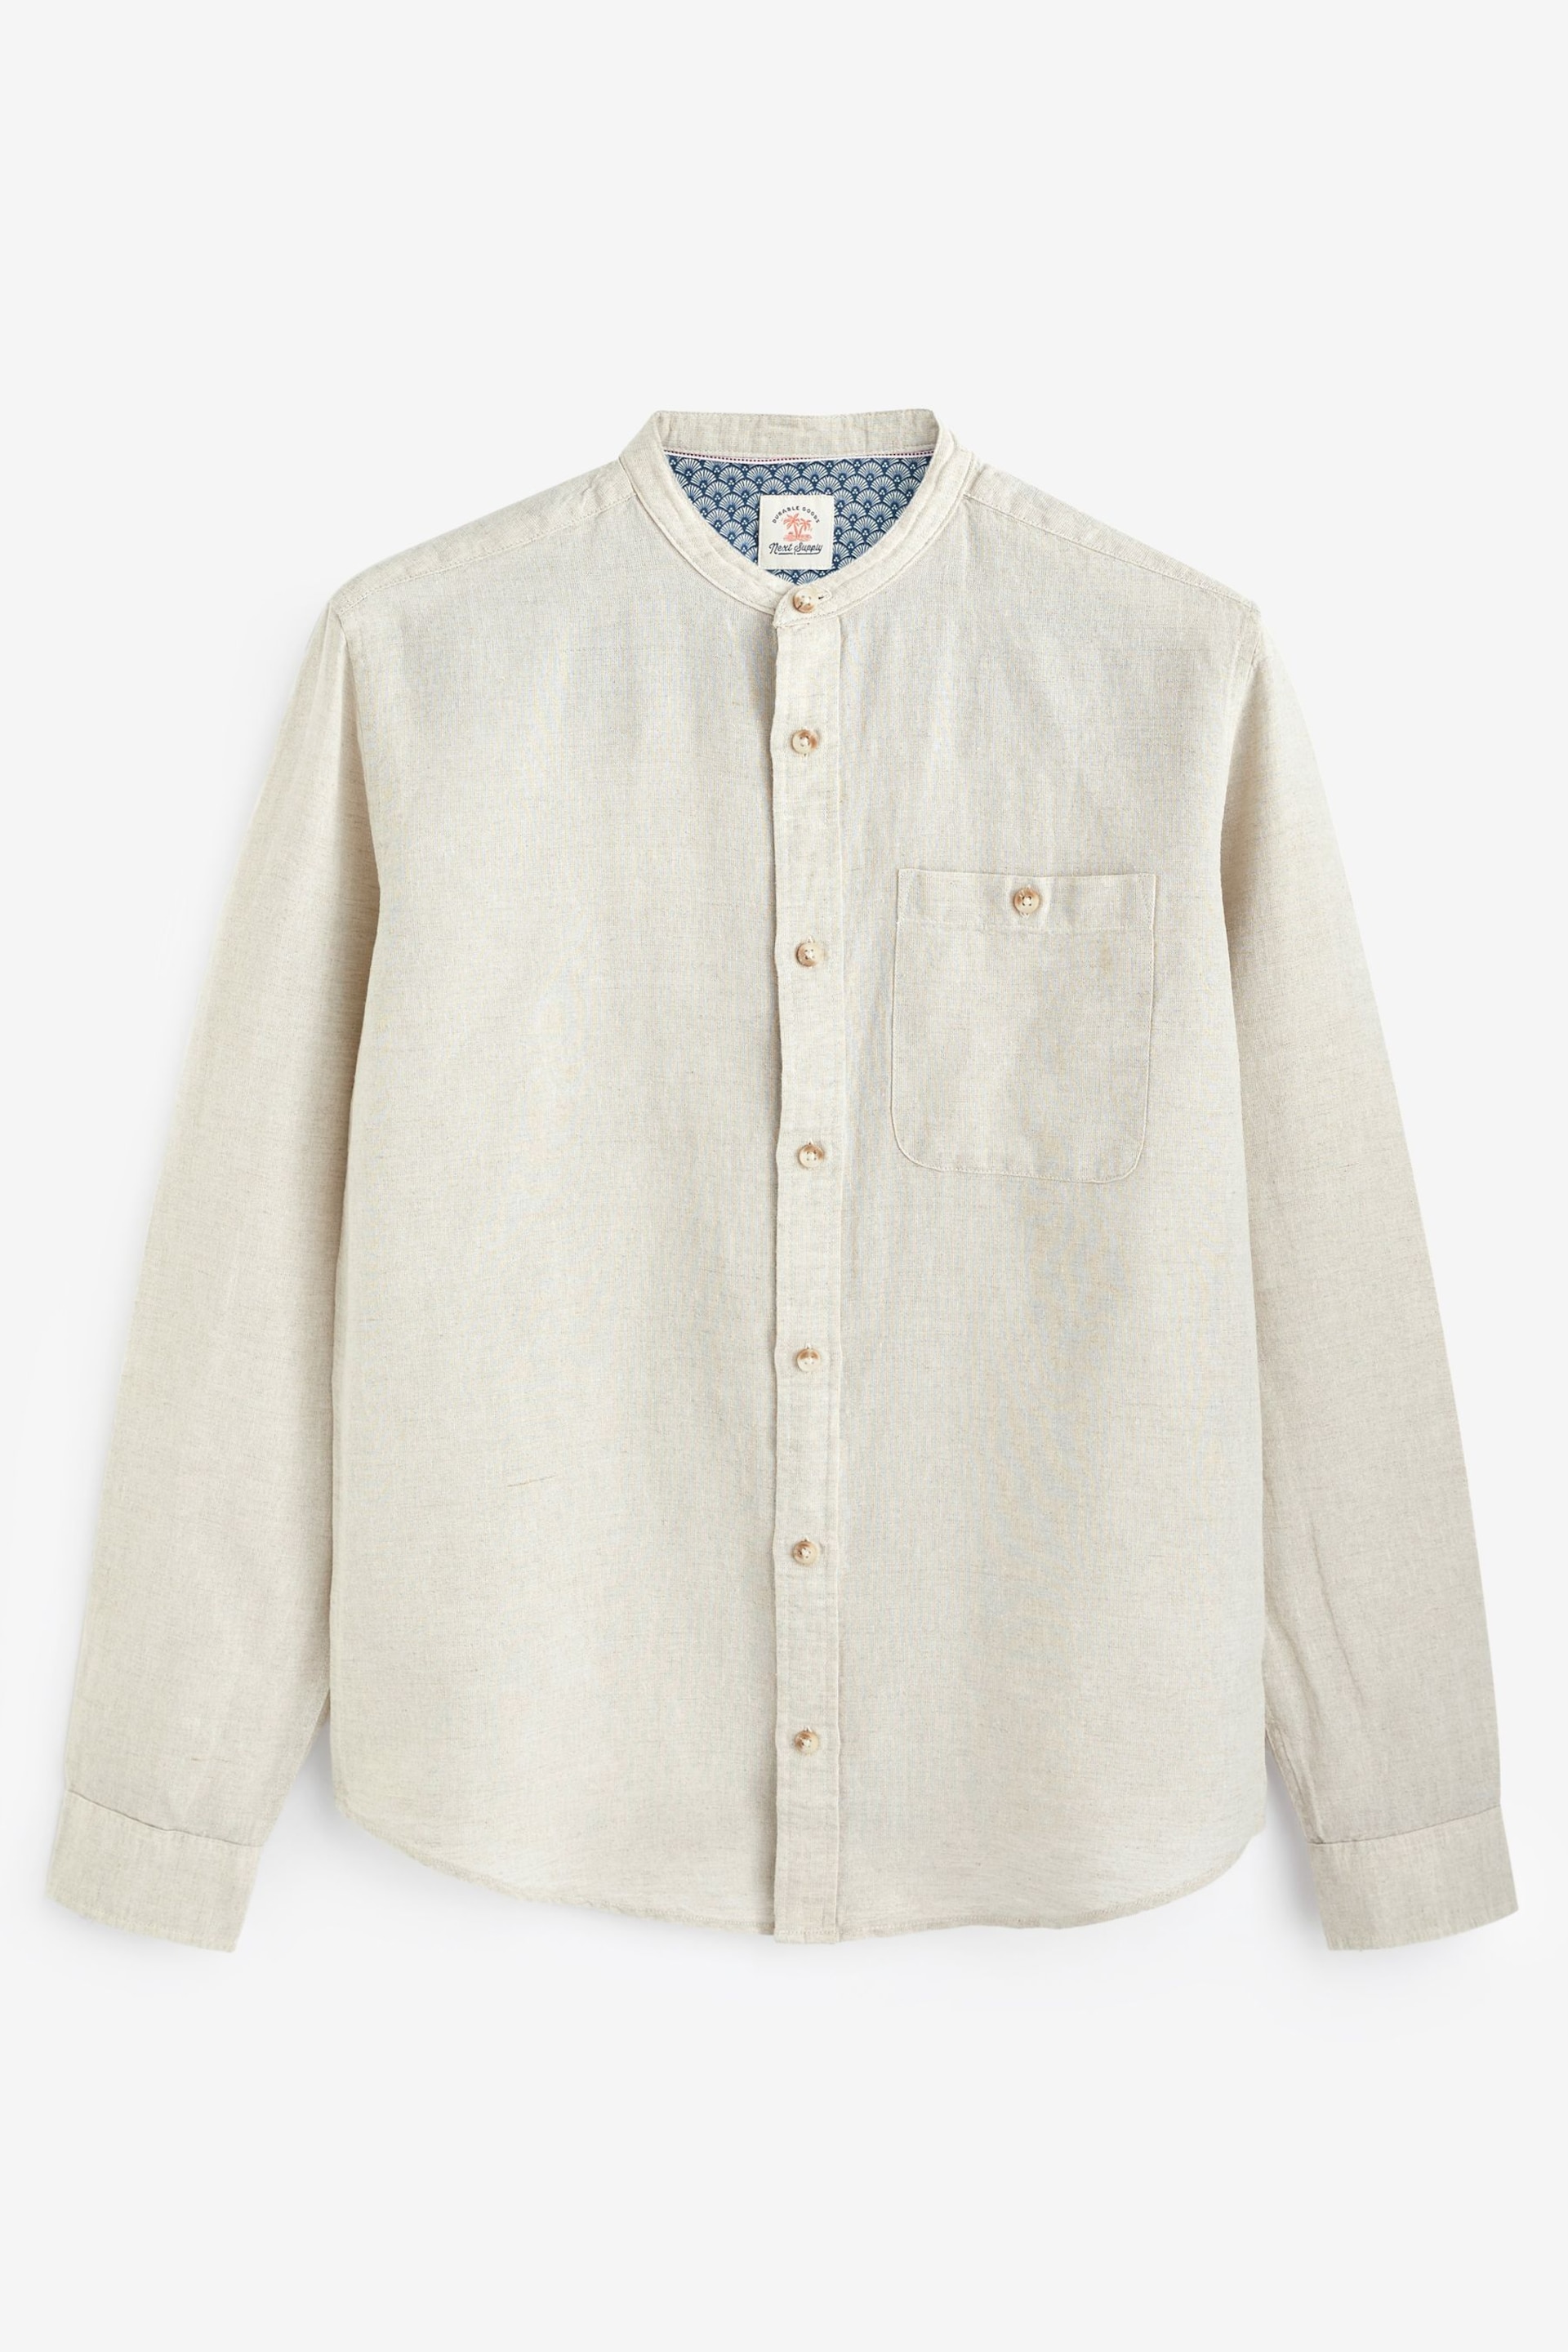 Stone Grandad Collar Linen Blend Long Sleeve Shirt - Image 5 of 5